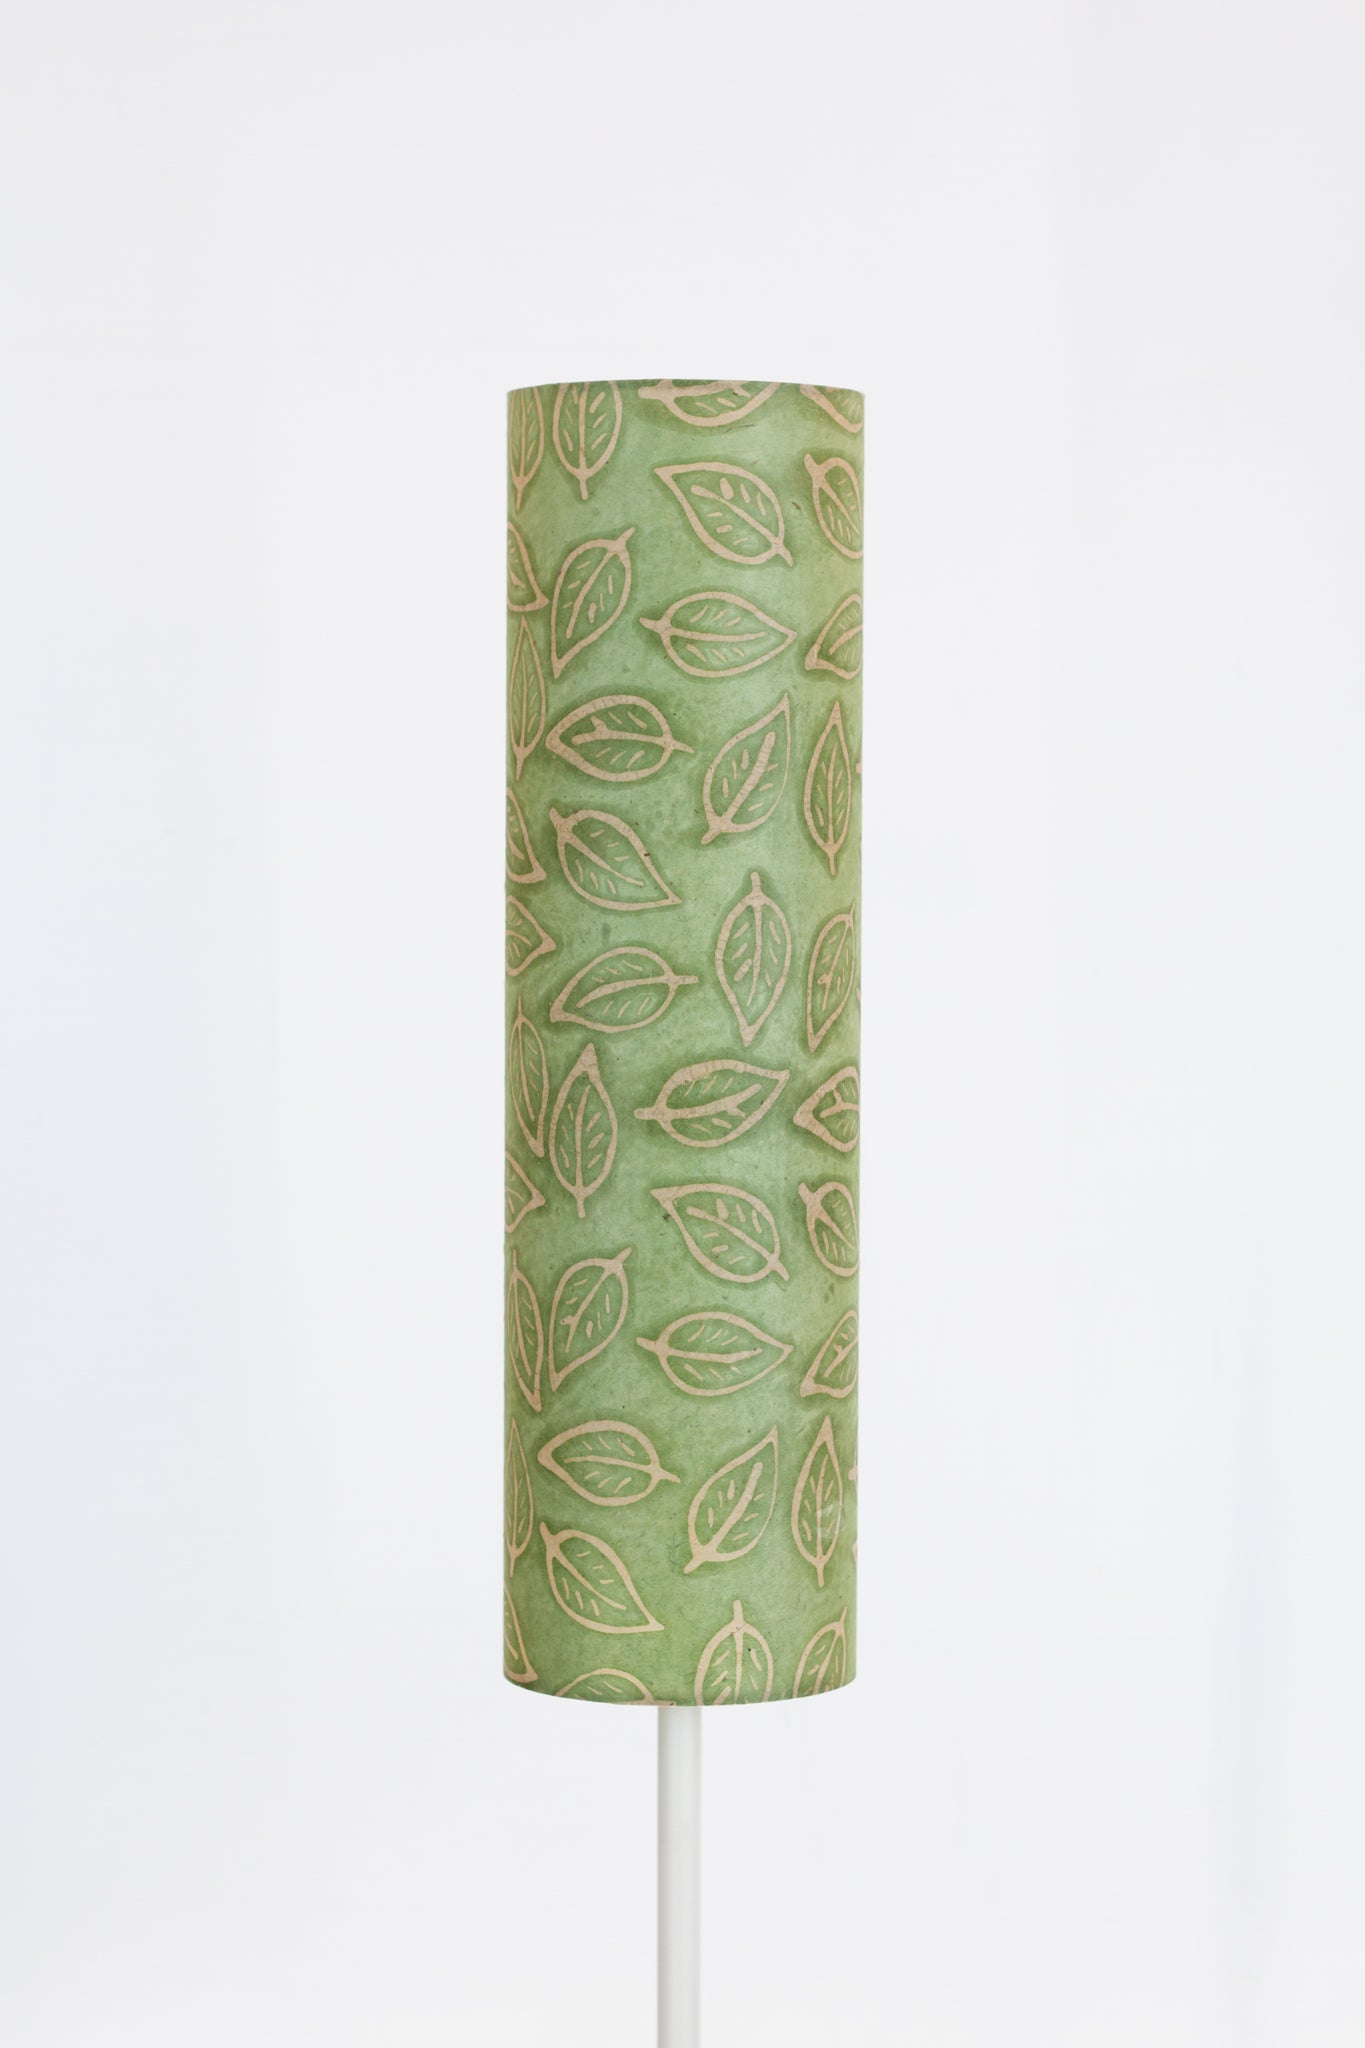 Drum Lamp Shade - P29 - Batik Leaf on Green, 15cm(diameter) x 55cm(h)